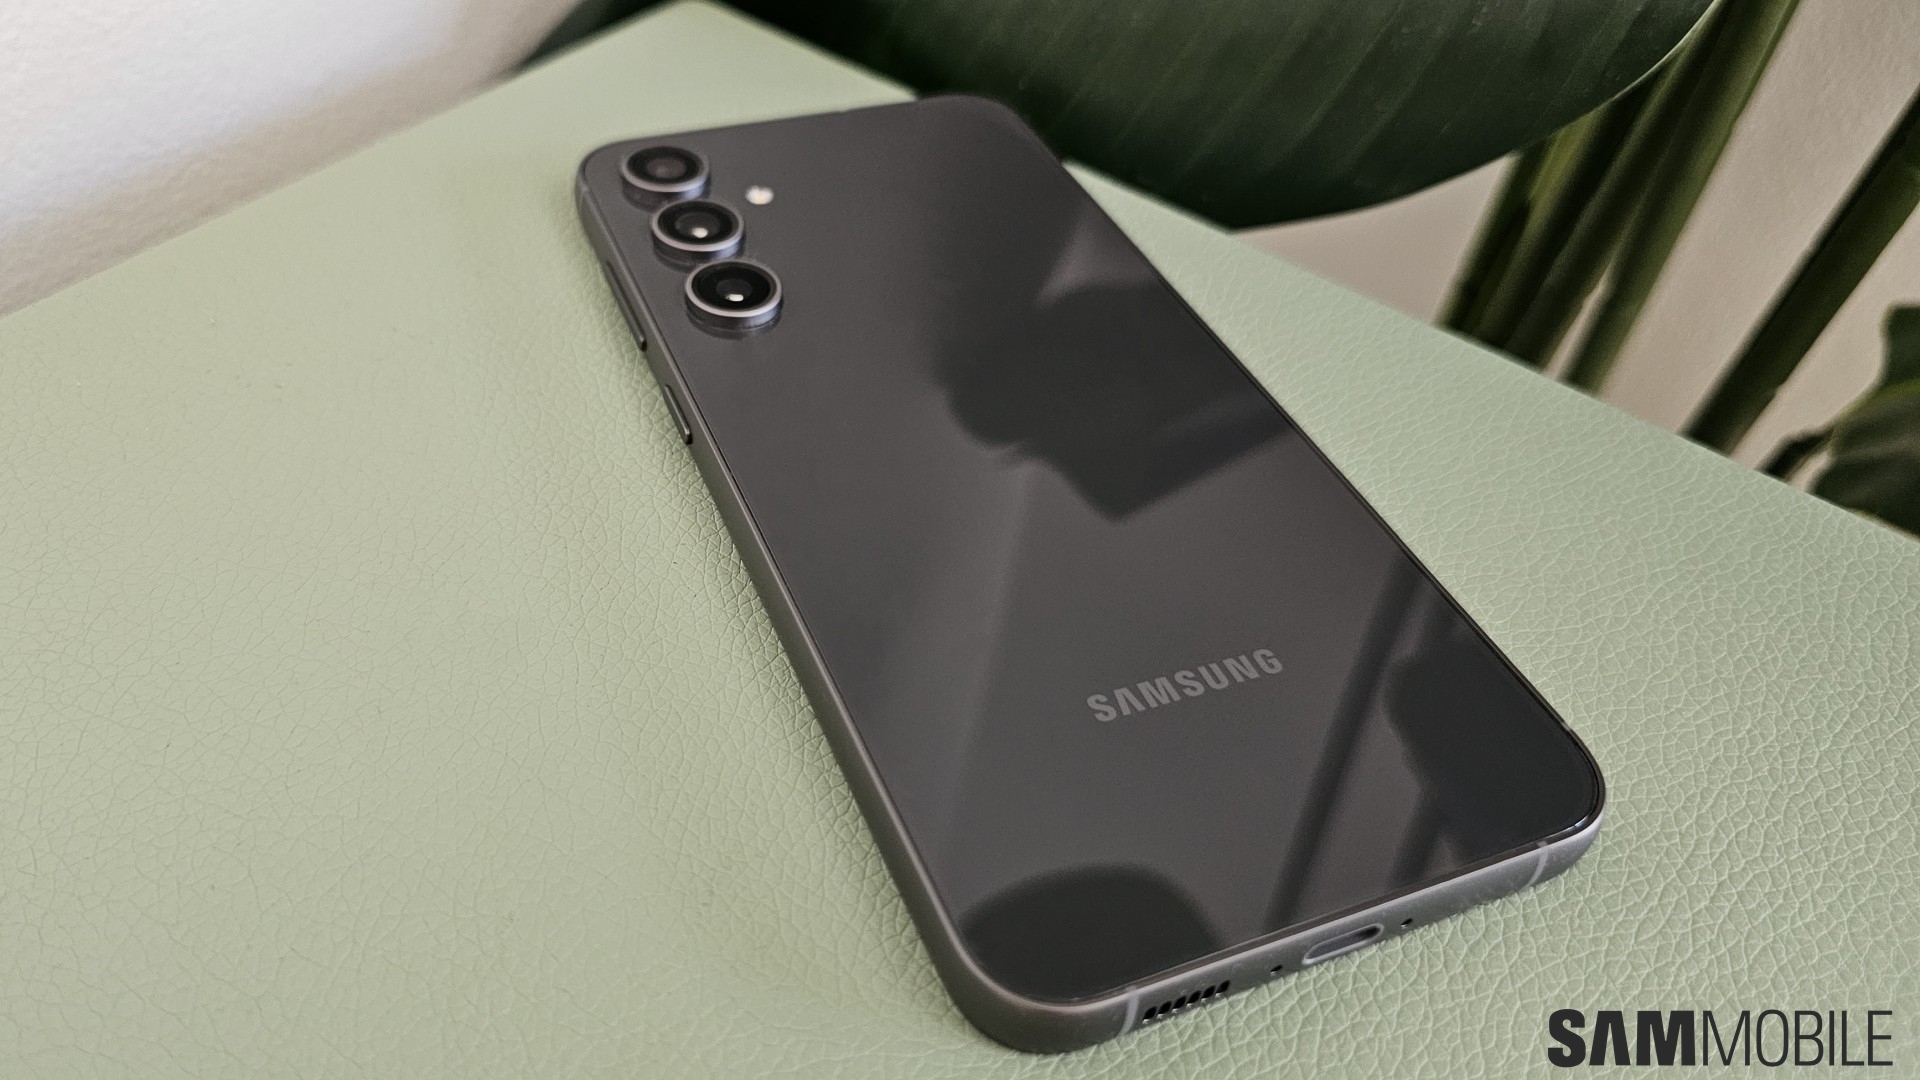 Smartphones Samsung Galaxy S20 FE : écran 120 Hz et 5G